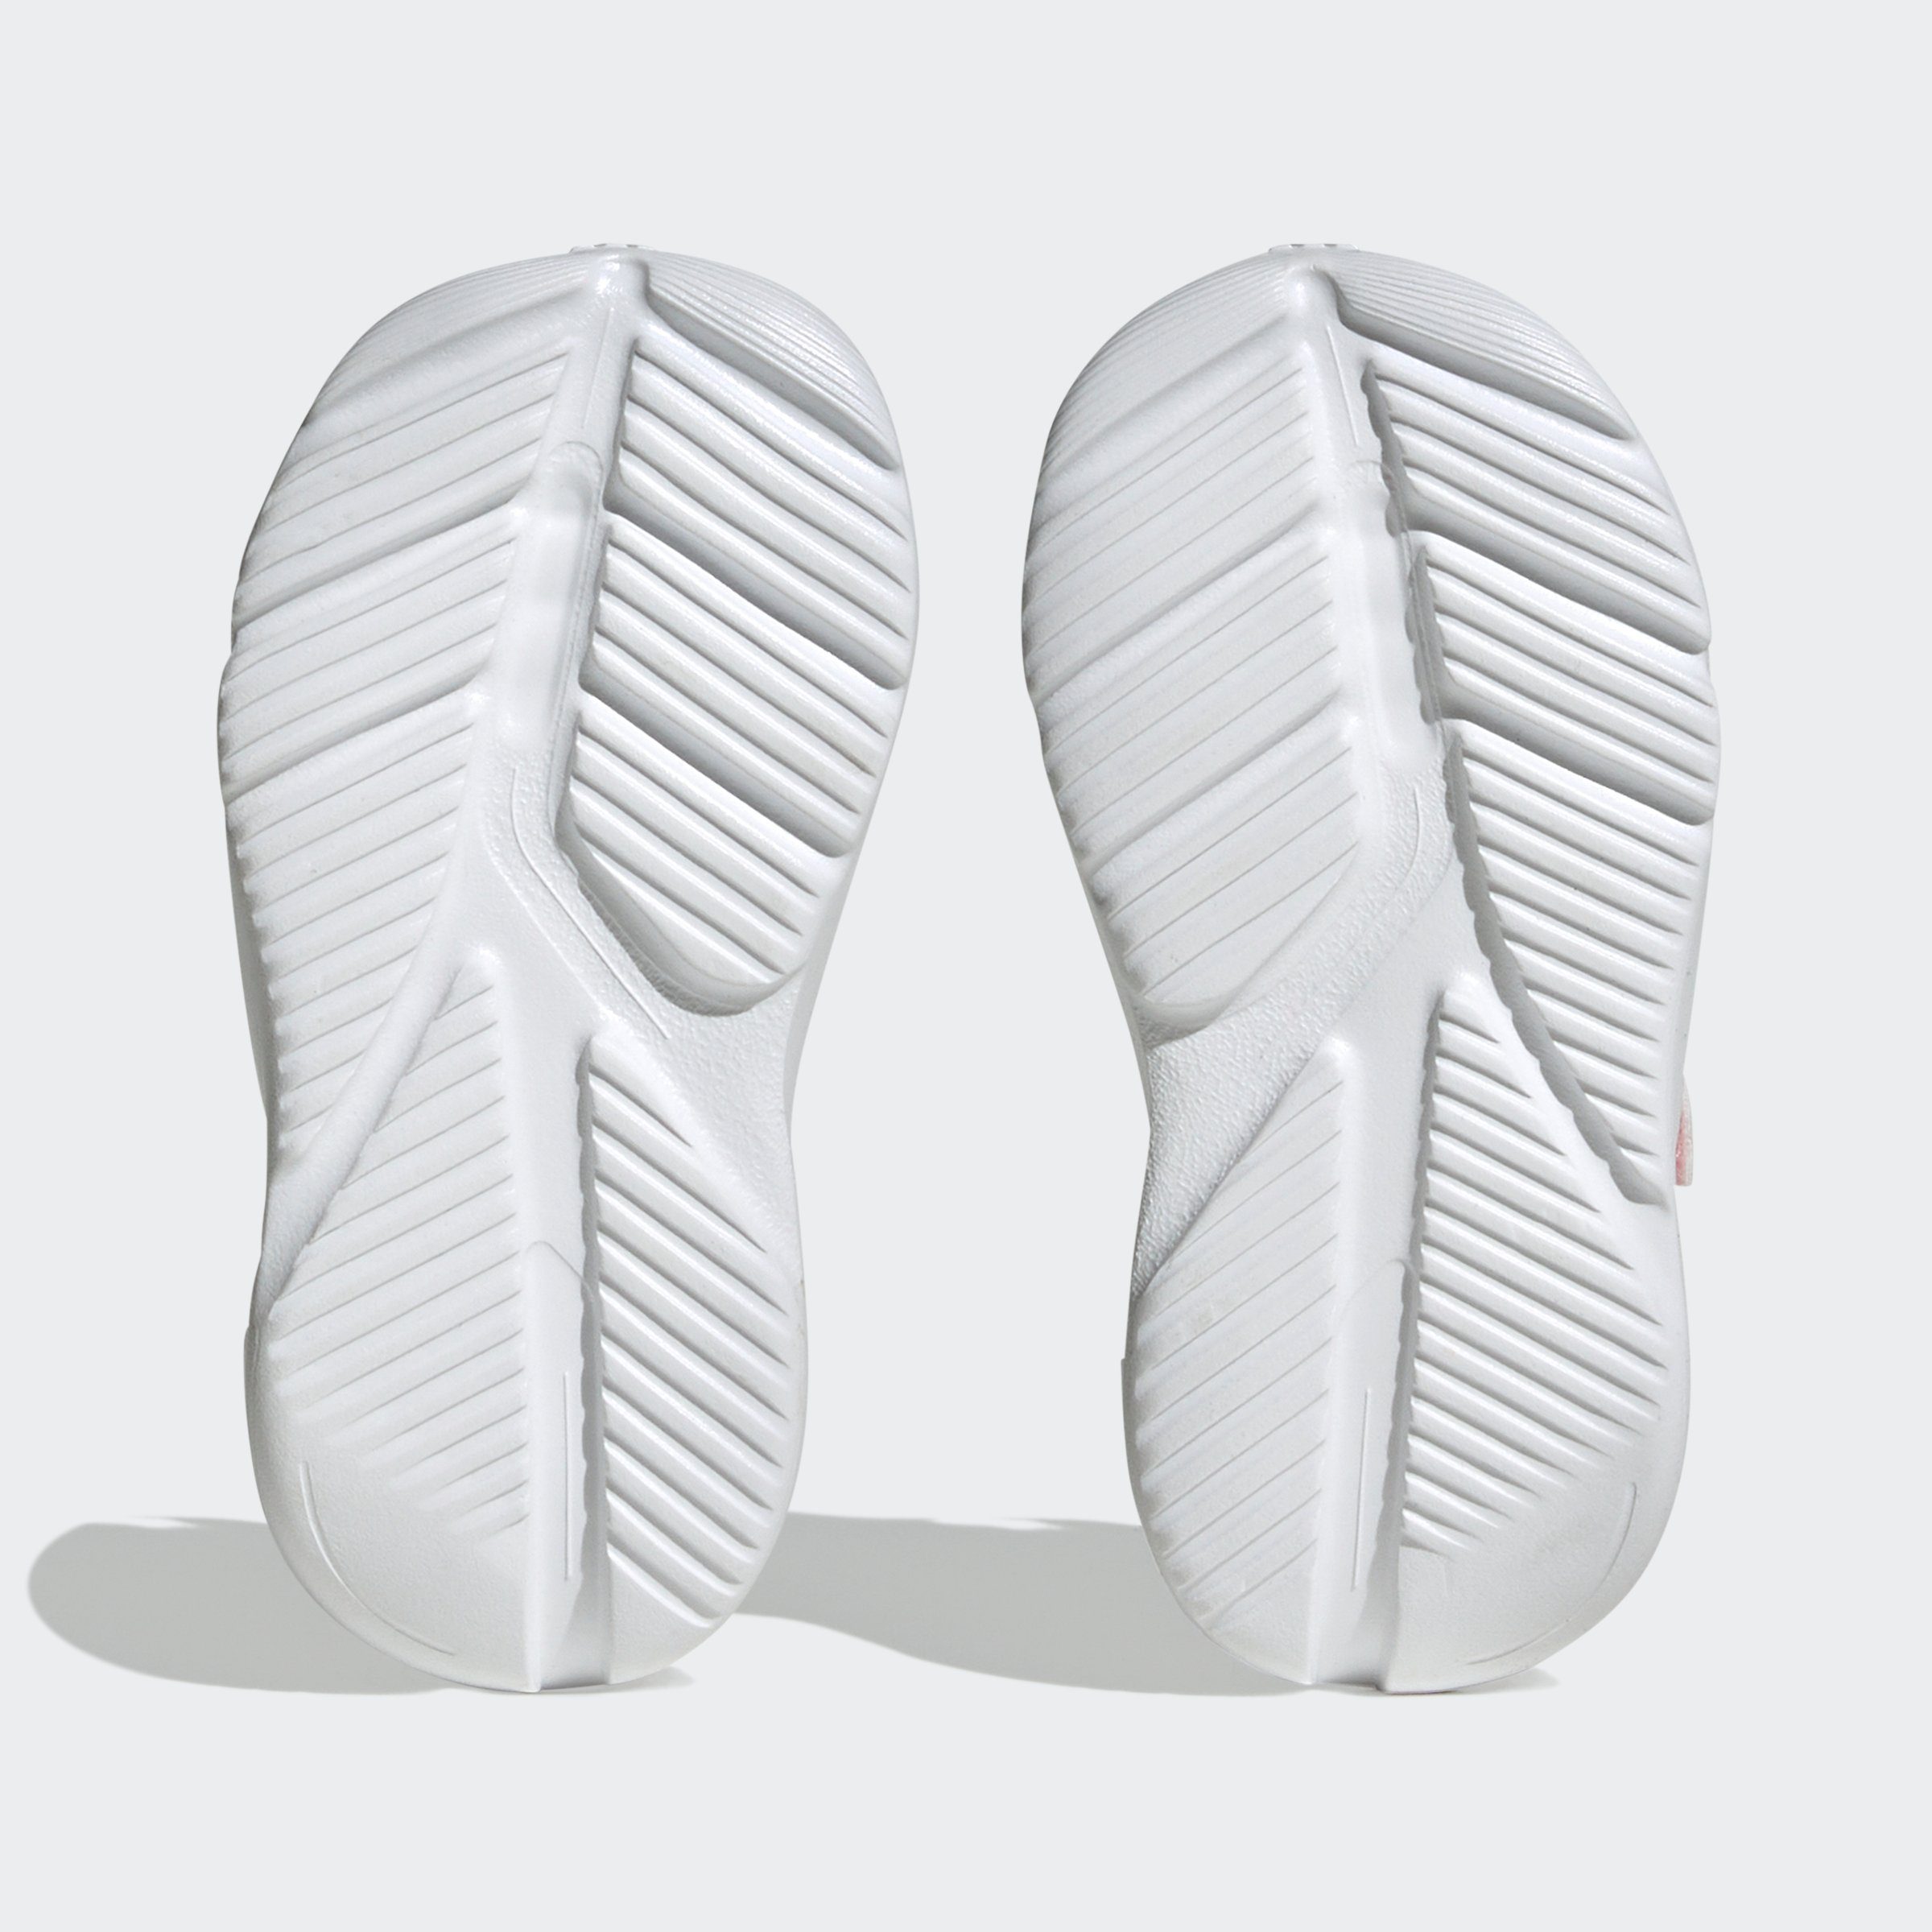 Sneaker adidas White DURAMO Clear Cloud / / Pink Pink KIDS Fusion SL Sportswear